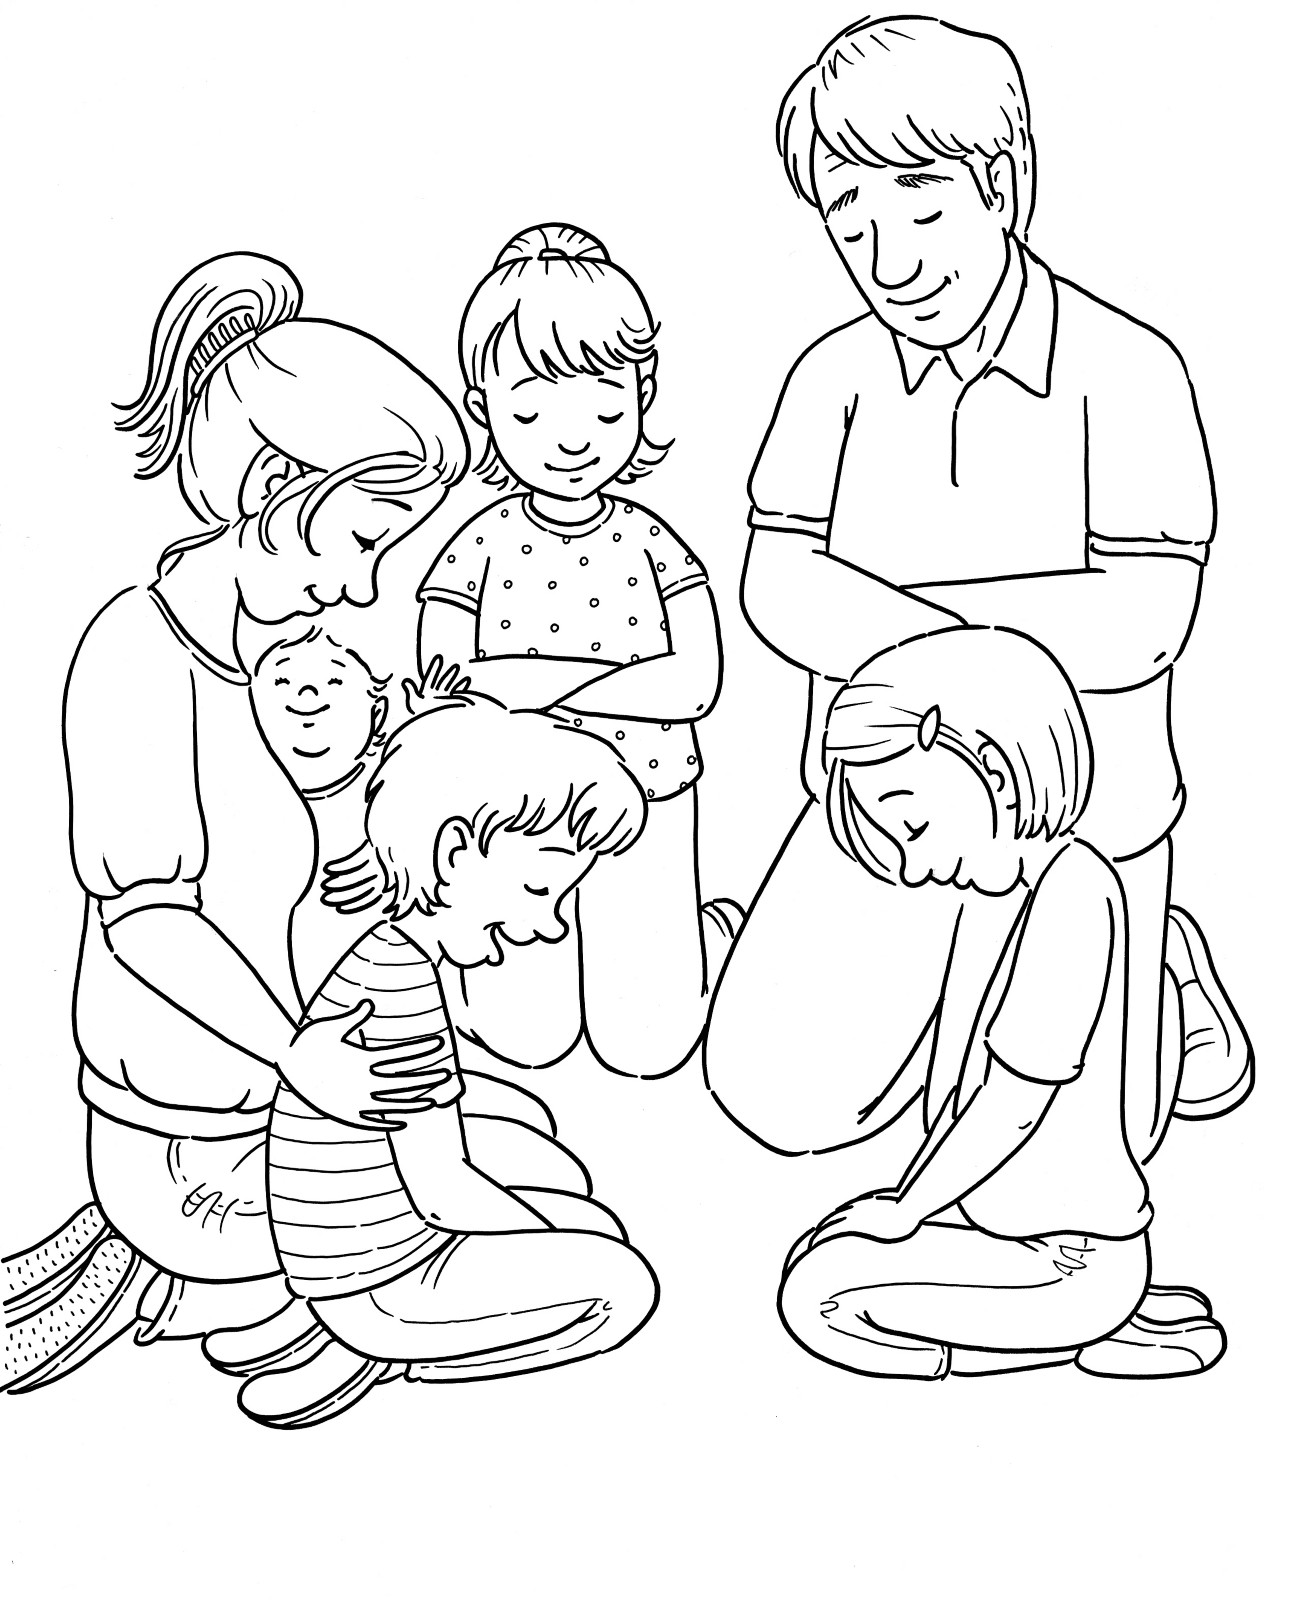 Child Praying Coloring Page
 Family Prayer